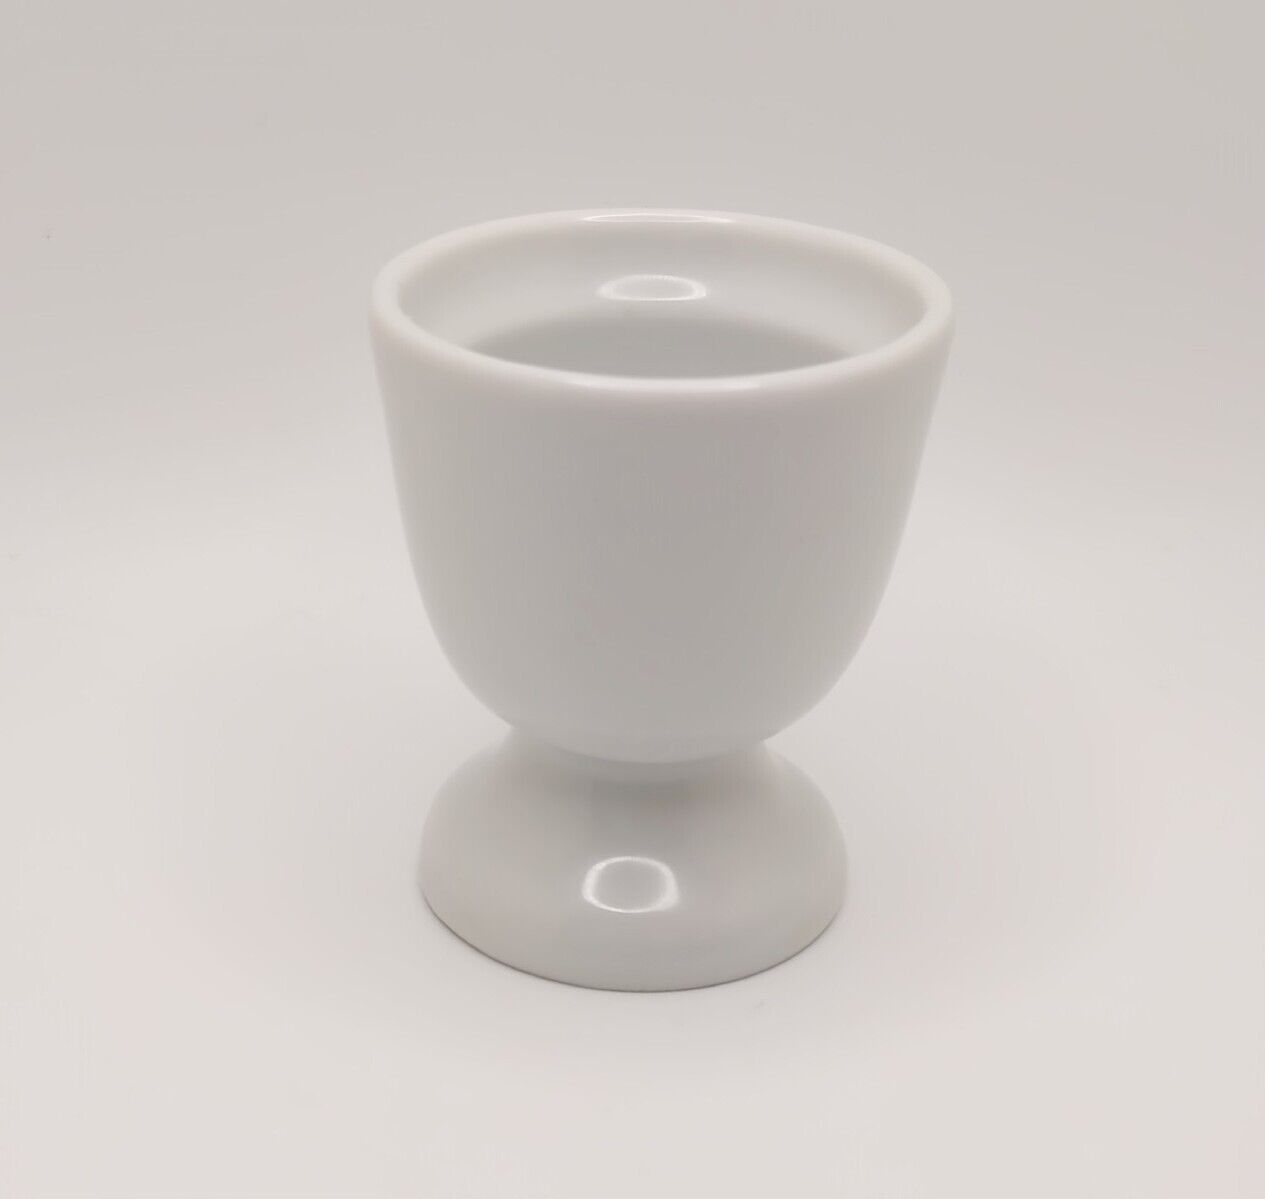 Vintage Apilco Yves Deshoulieres Egg Cup Holder Made of Porcelain Made in France